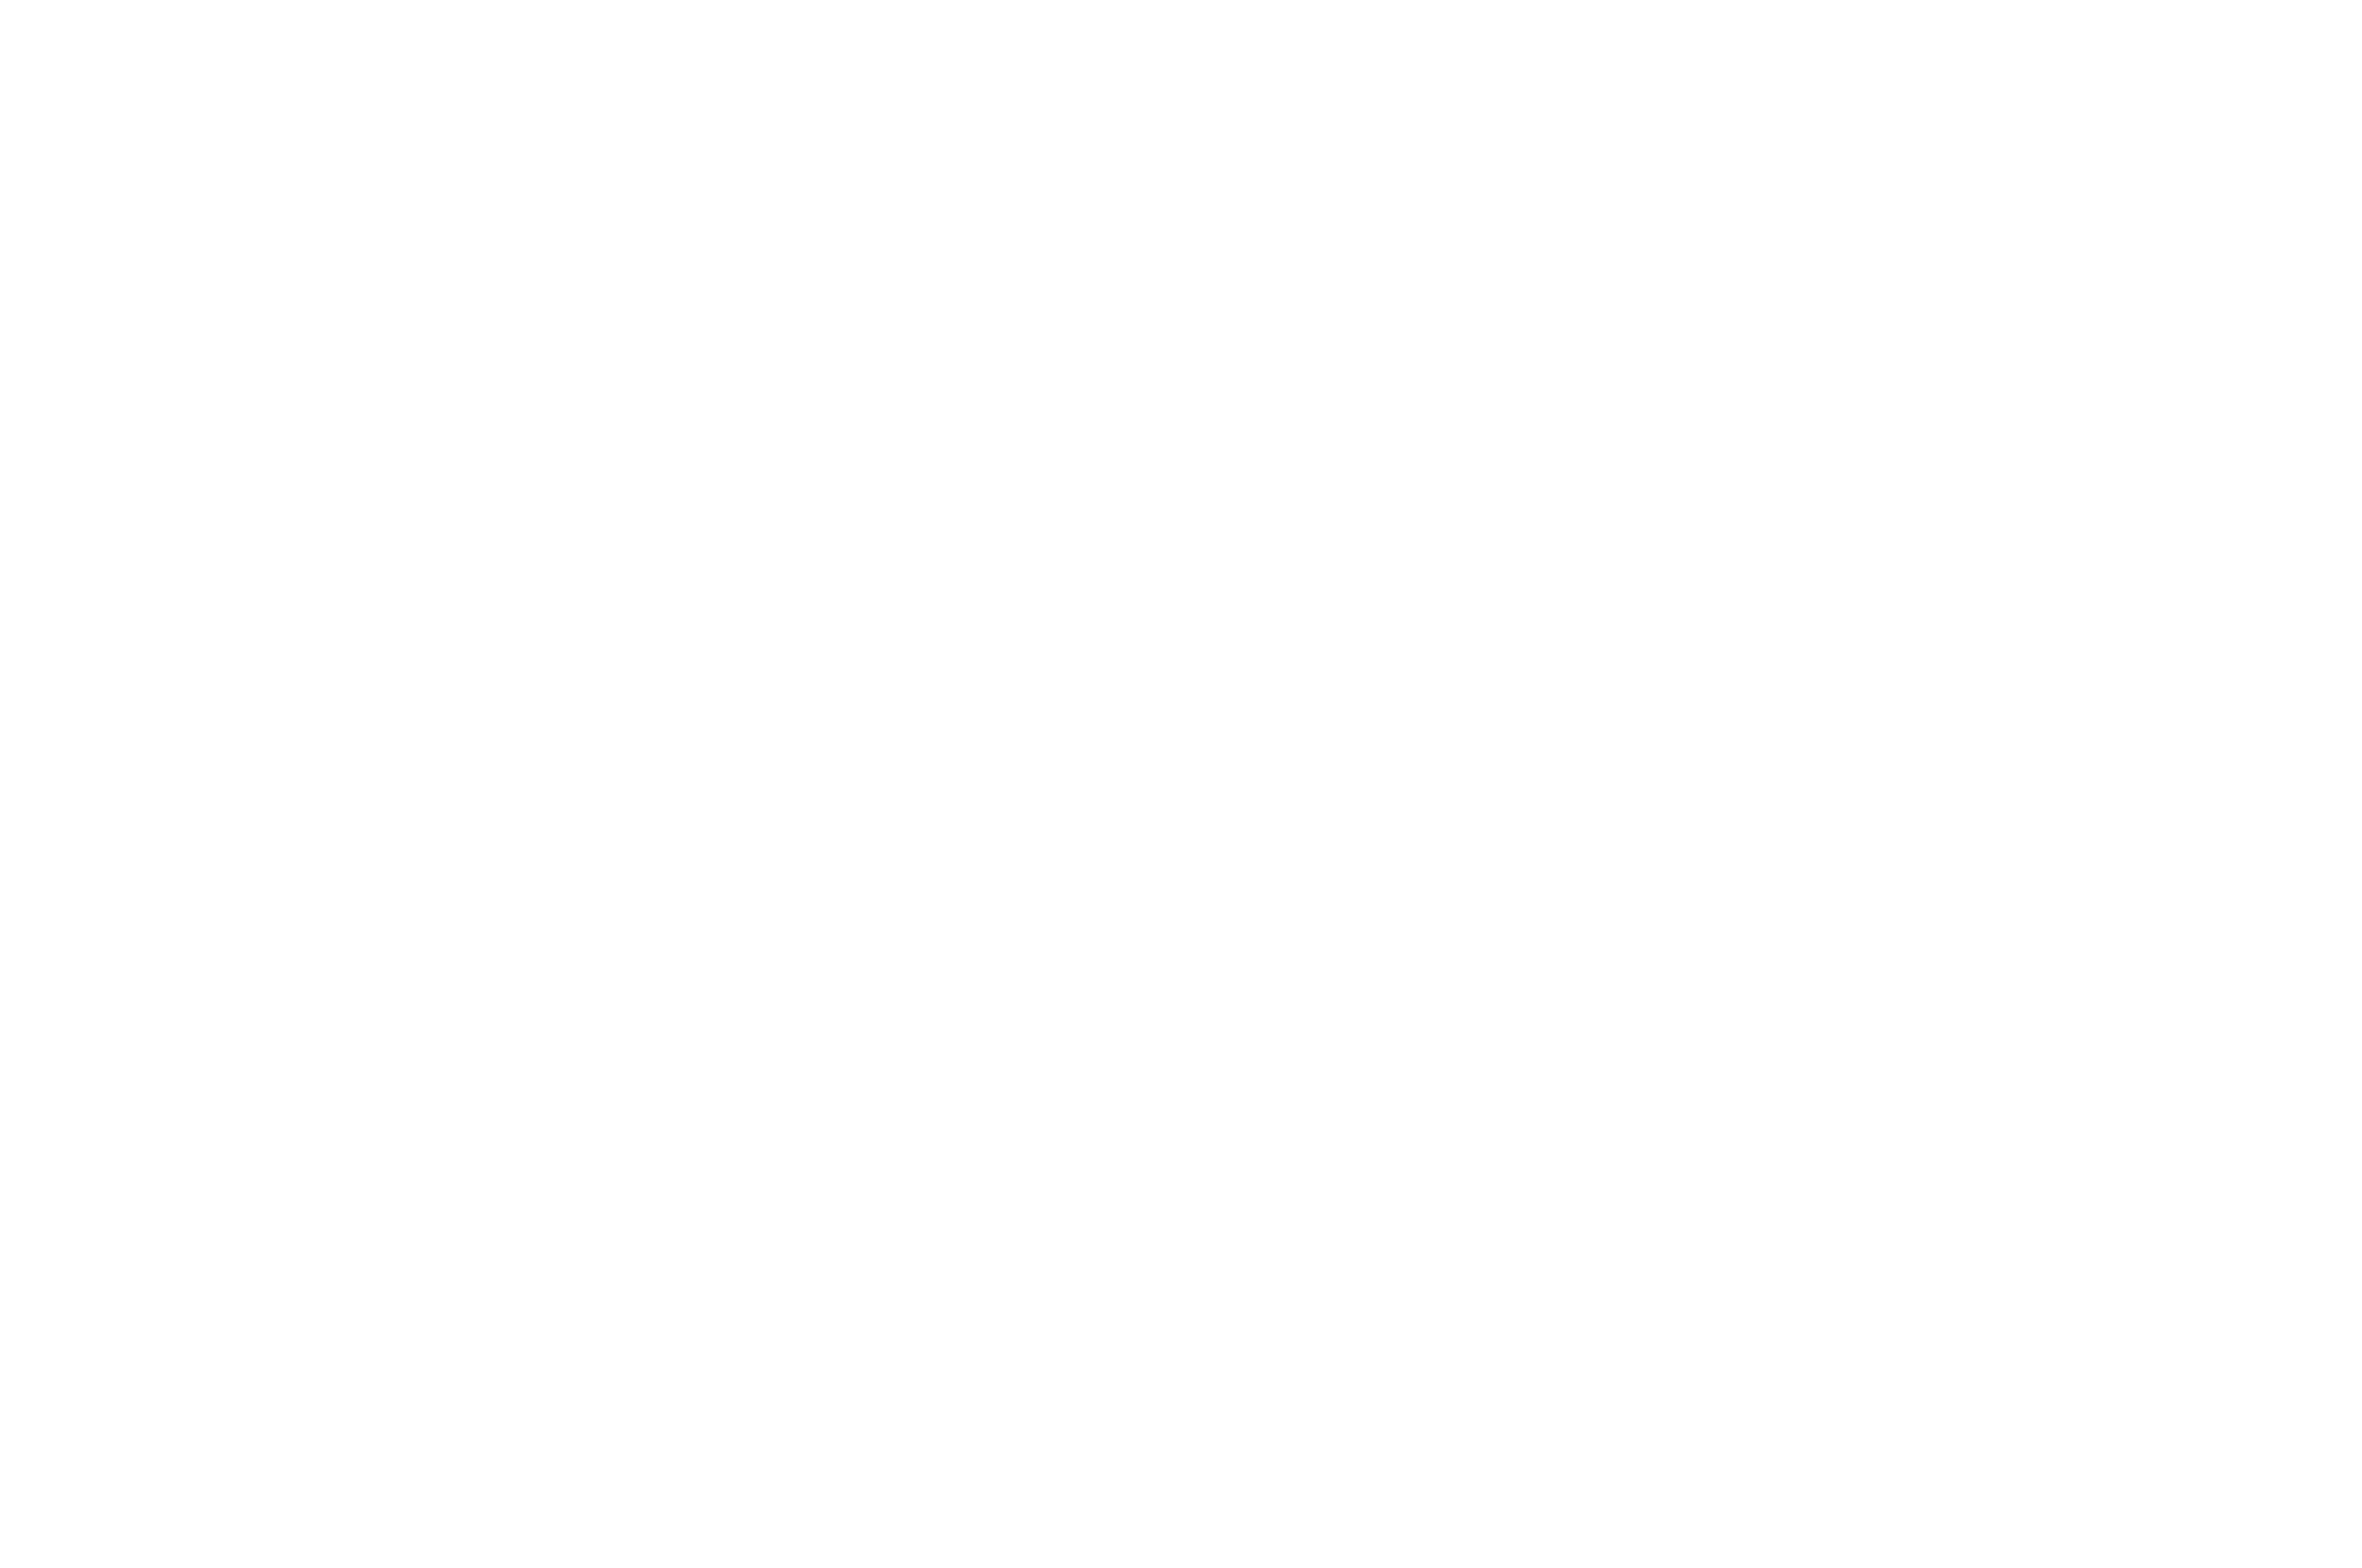 Hellifax 2023 Winner Best Effects laurels